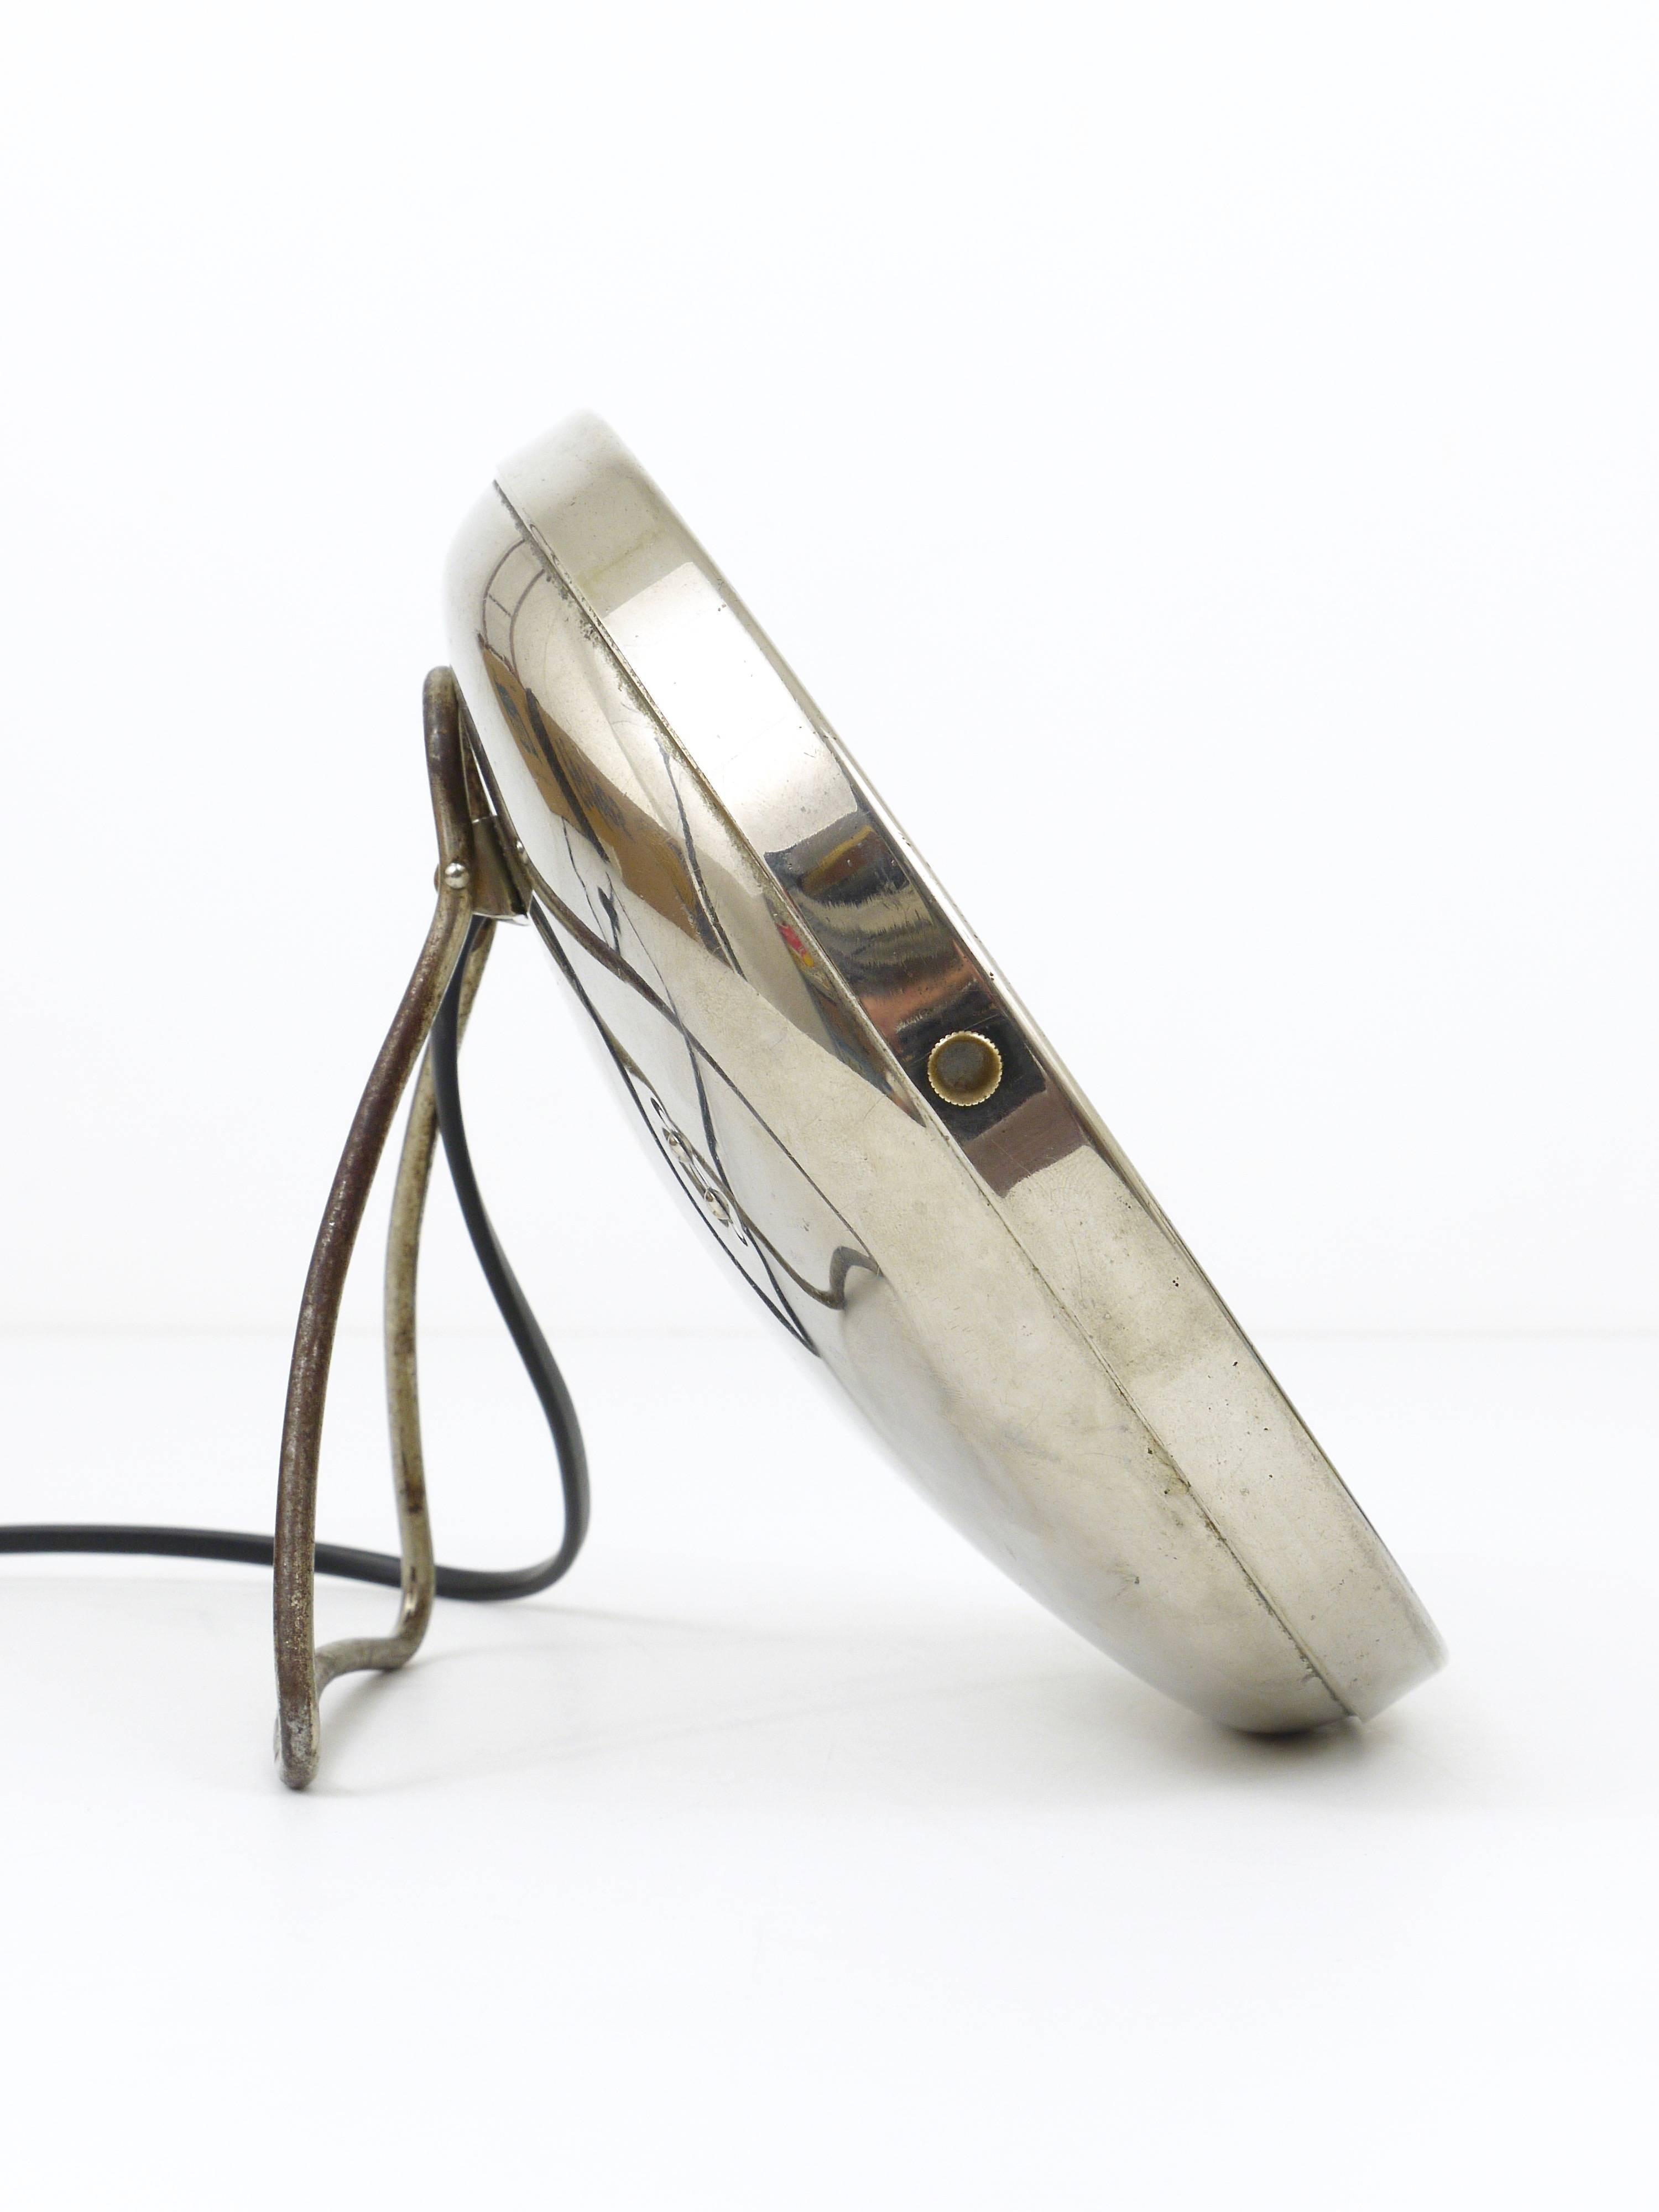 Illuminated Shaving or Vanity Mirror by Marcel Breuer, Bauhaus for Zeiss Ikon 4